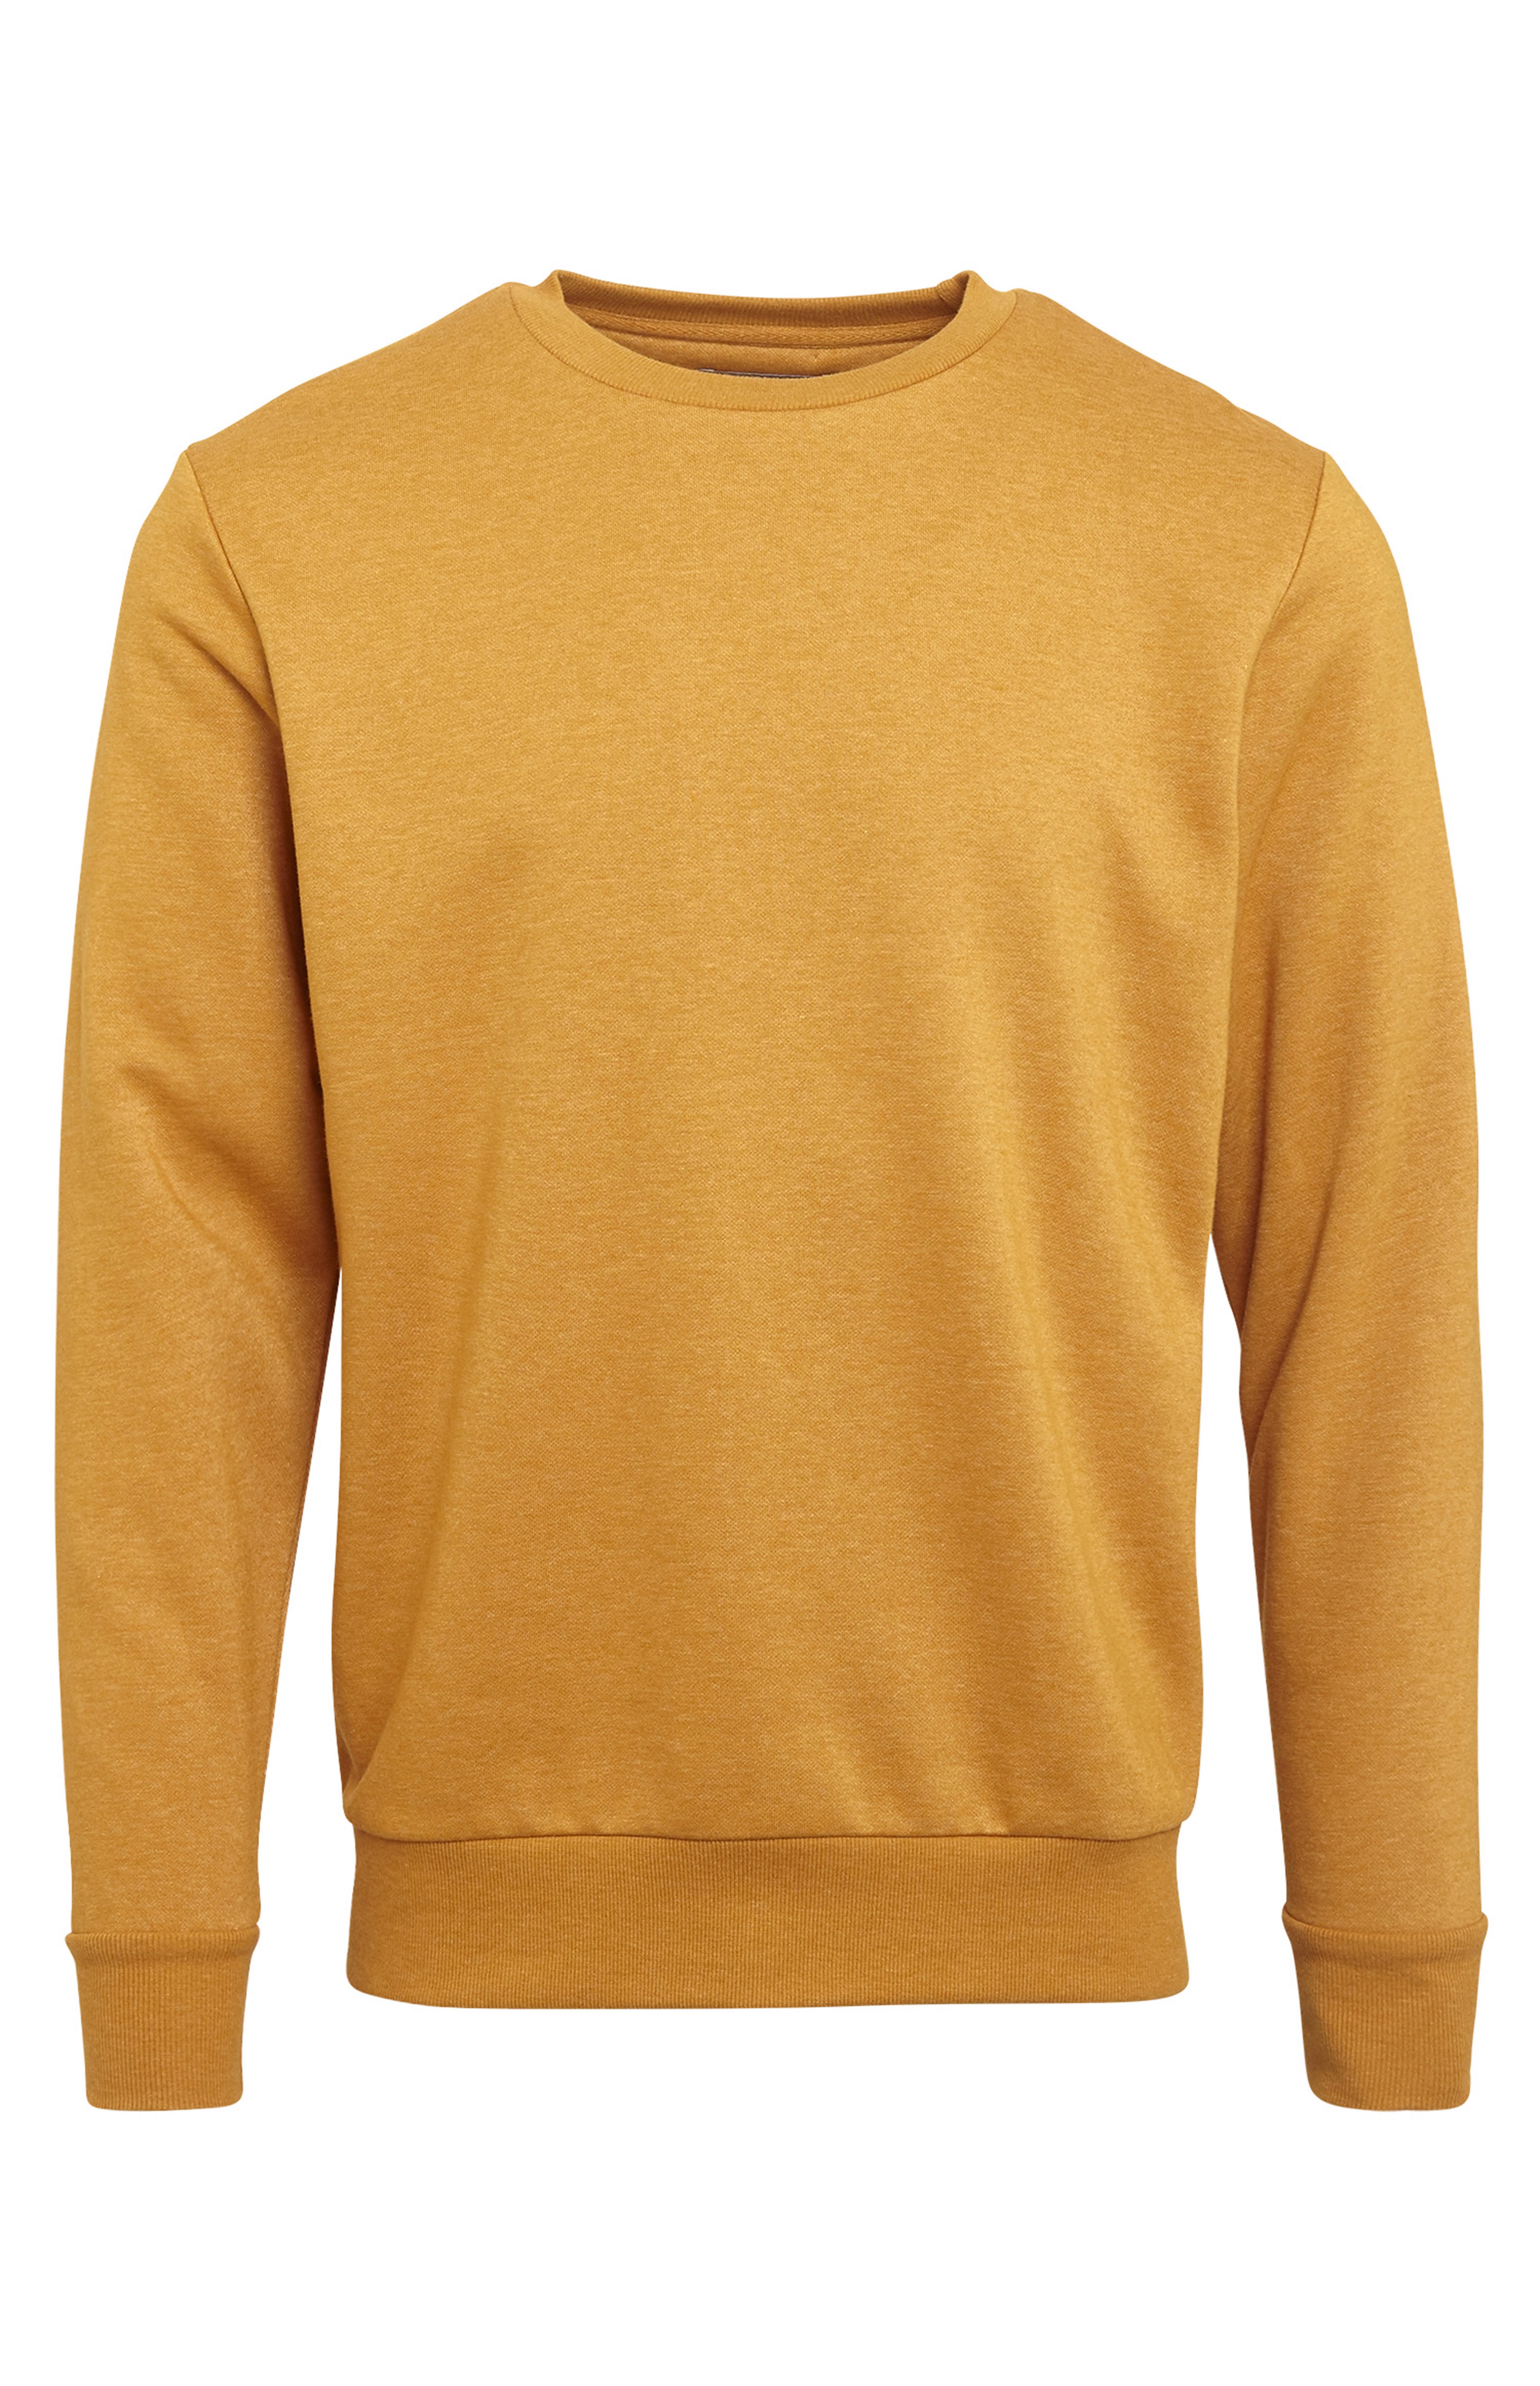 Mustard Basic Crew Neck Sweater | Men's Jumpers & Sweaters | Men's ...